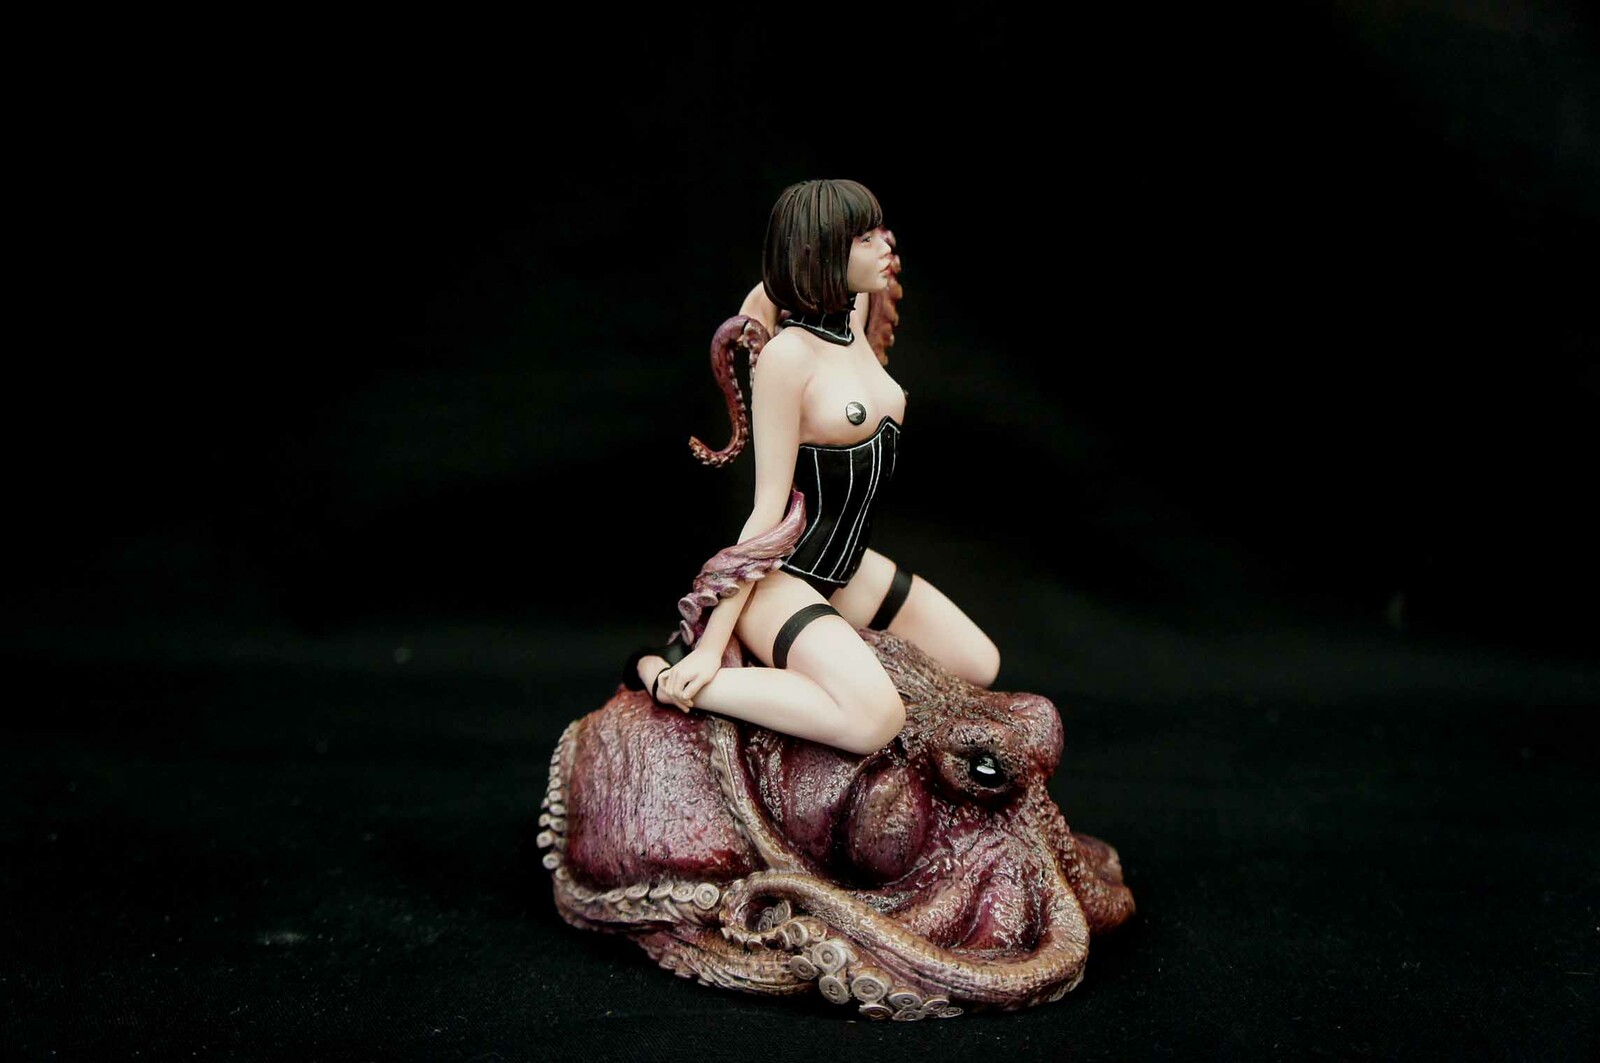 Octopus Girl Art Statue 章魚少女
https://www.solidart.club/